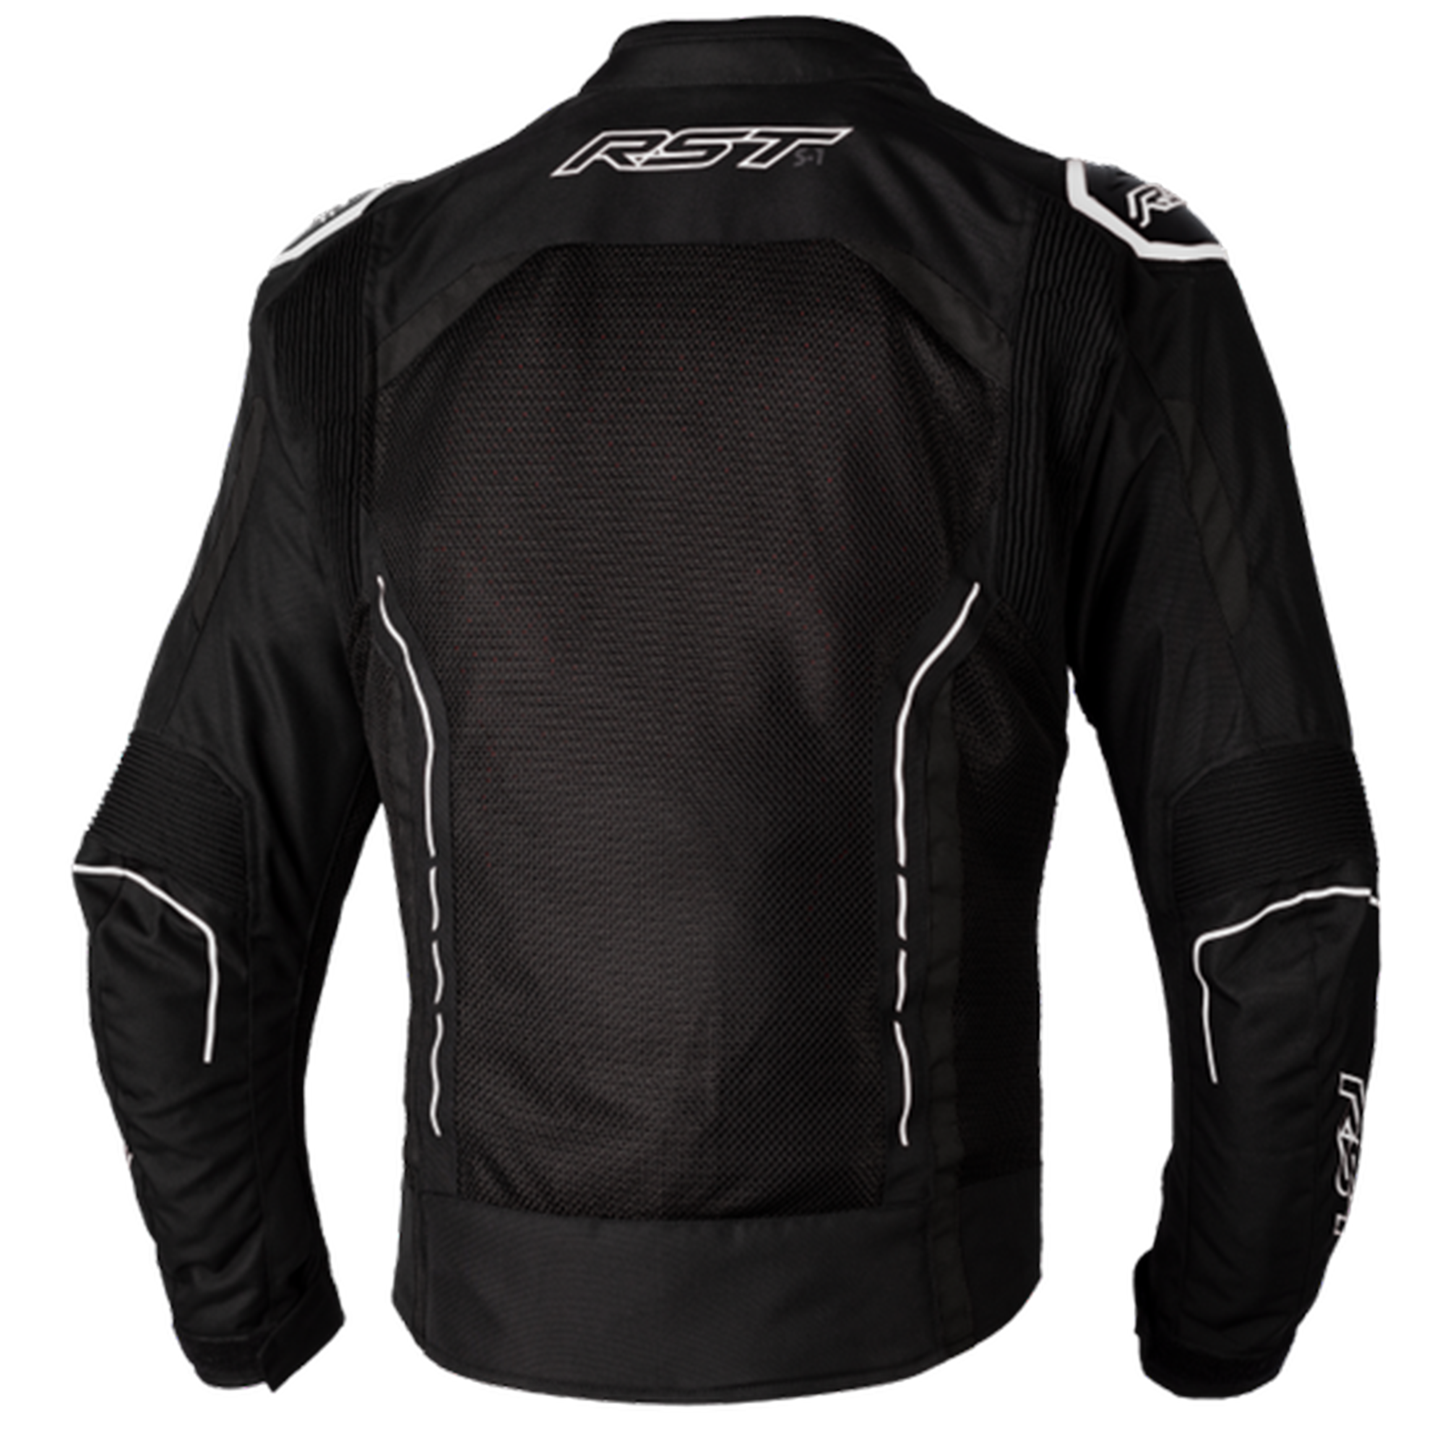 RST S1 Mesh (CE) Men's Textile Jacket - Black/White (3117)